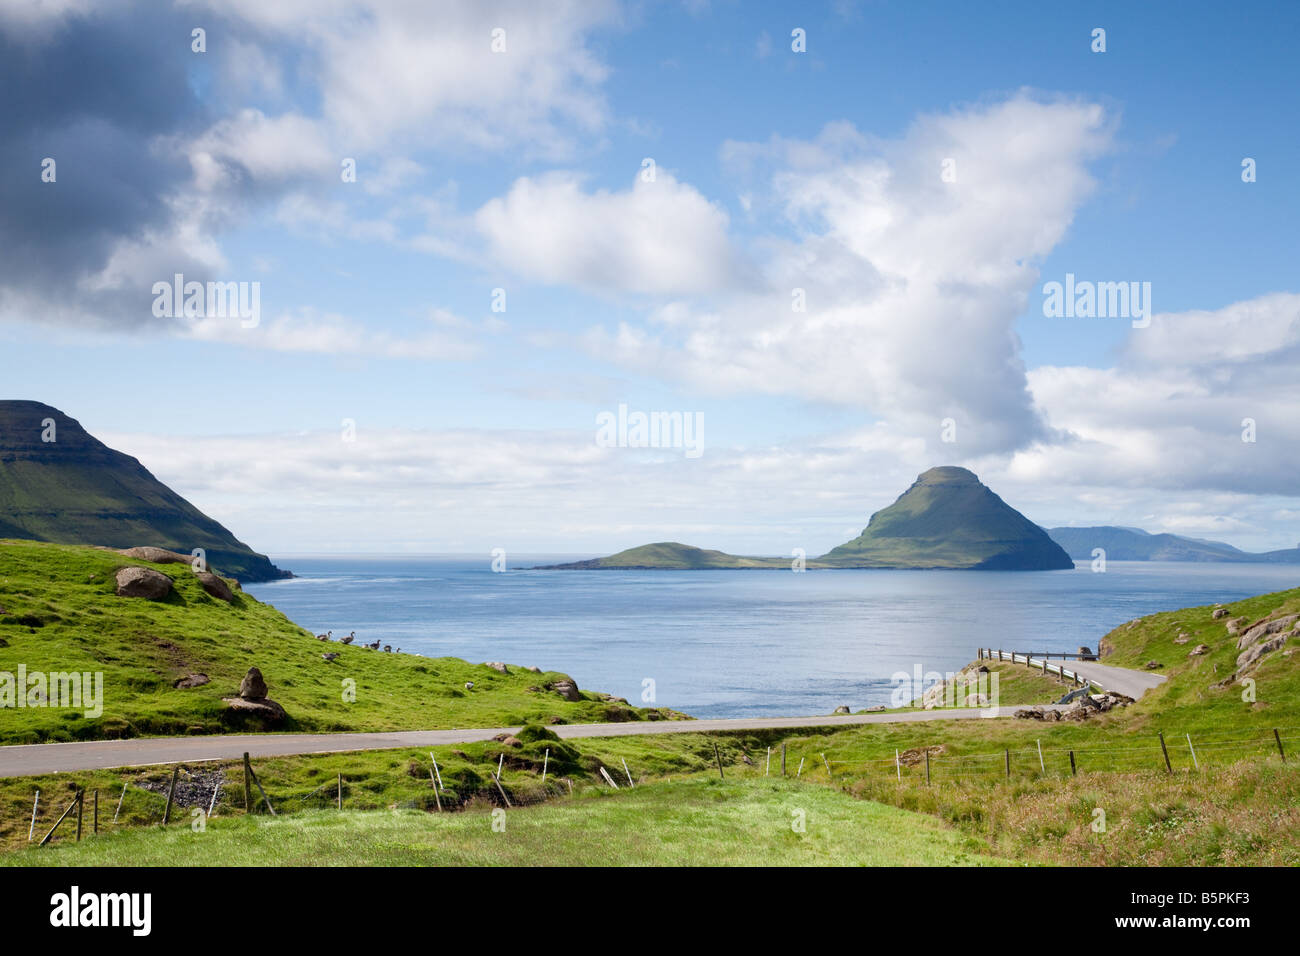 Koltur Insel von Streymoy Island, Färöer Inseln Stockfoto